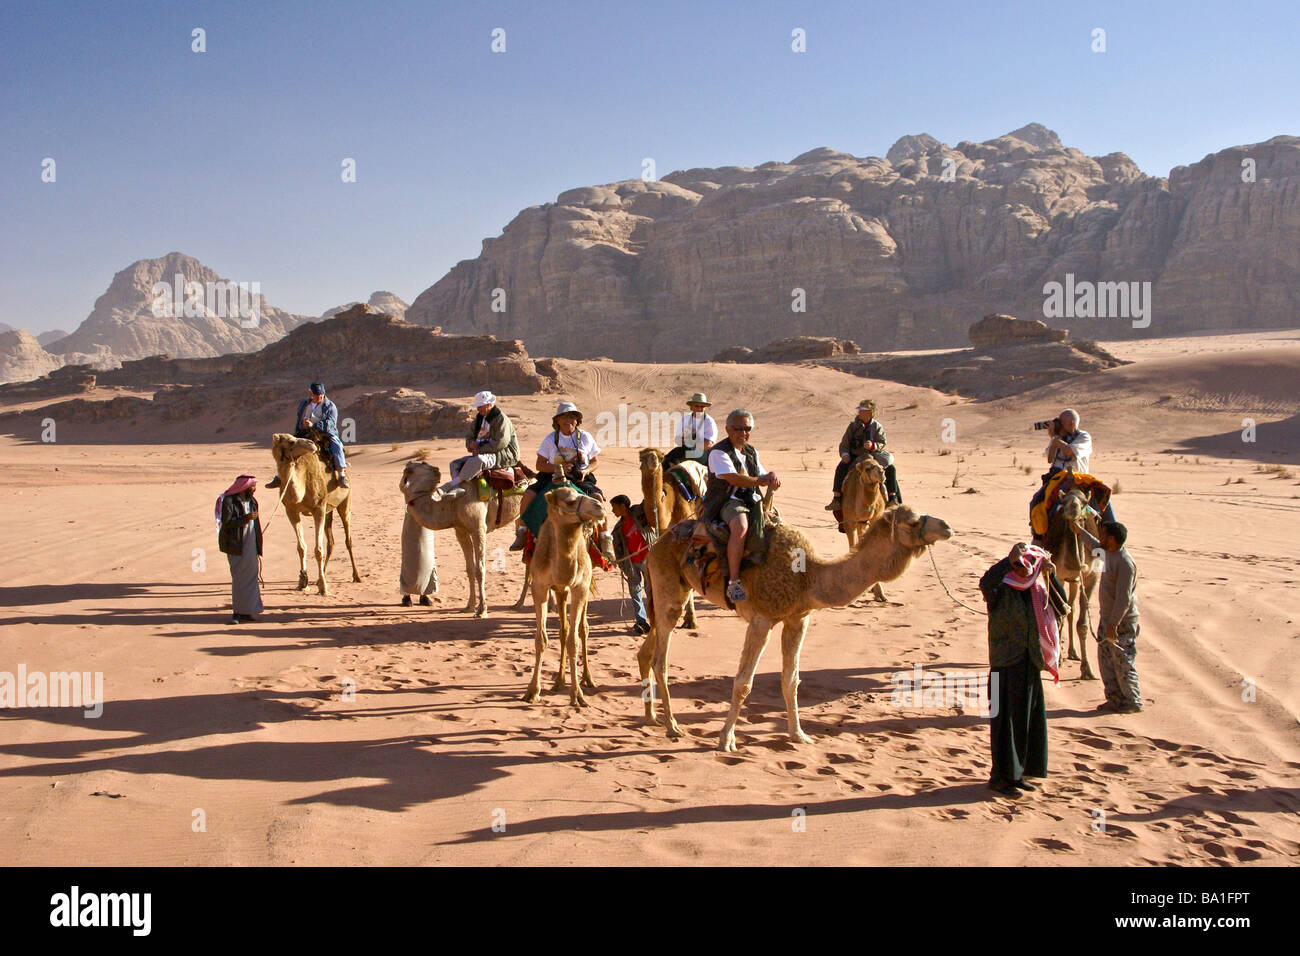 Tourists riding camels in desert, Wadi Rum, Jordan Stock Photo